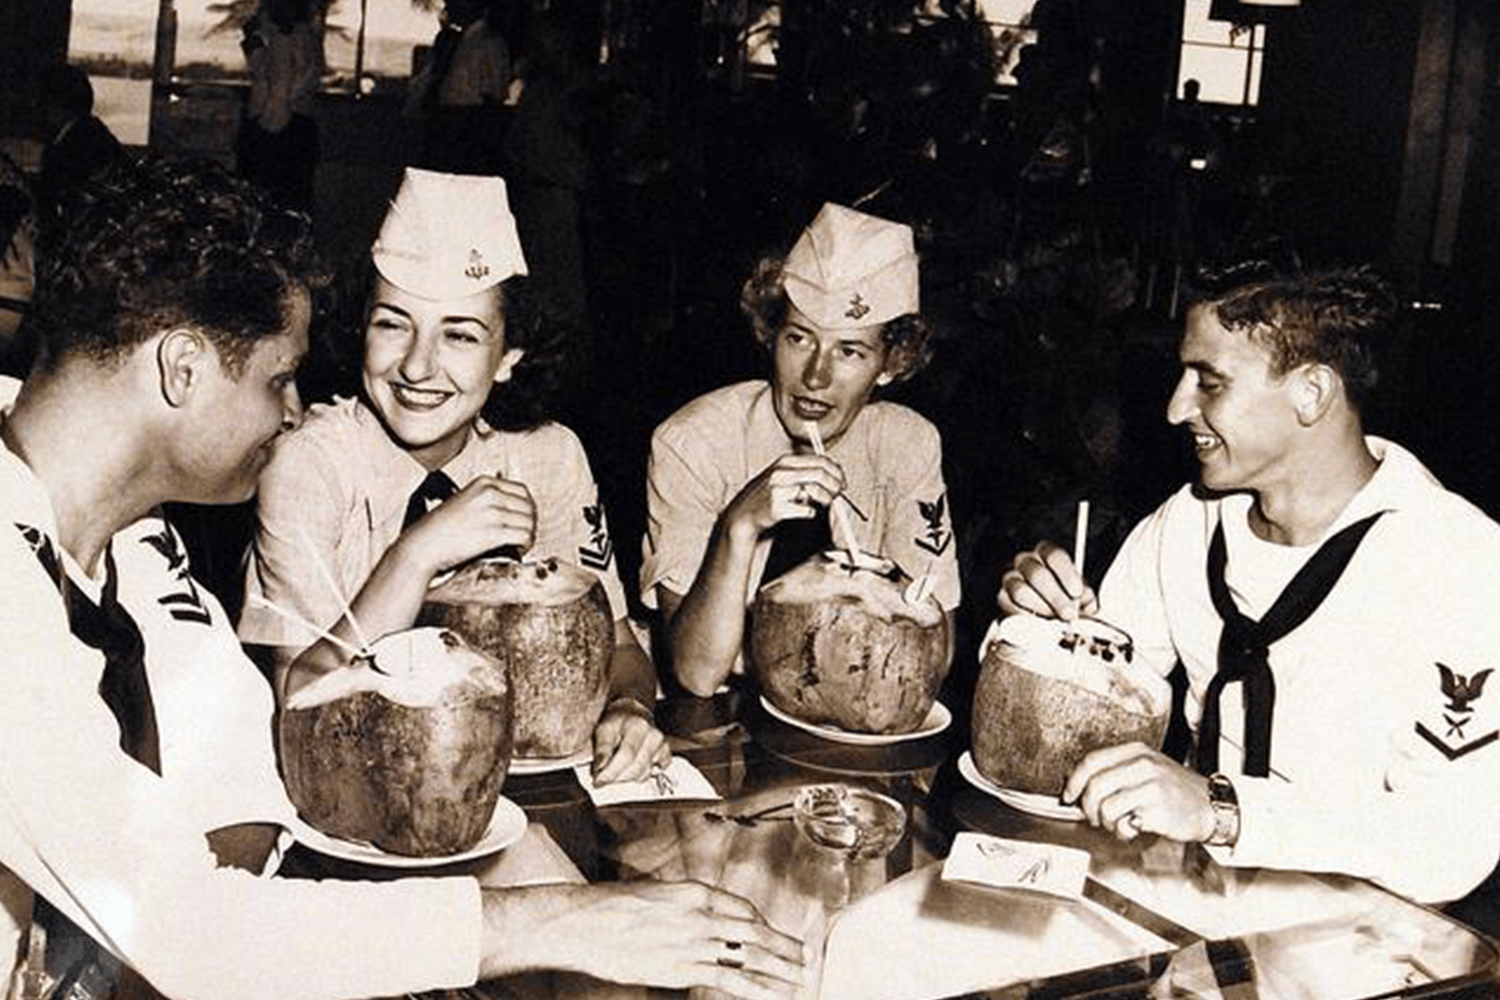 US Navy servicemen and women drinking piña coladas at the Caribe Hilton, c. 1953